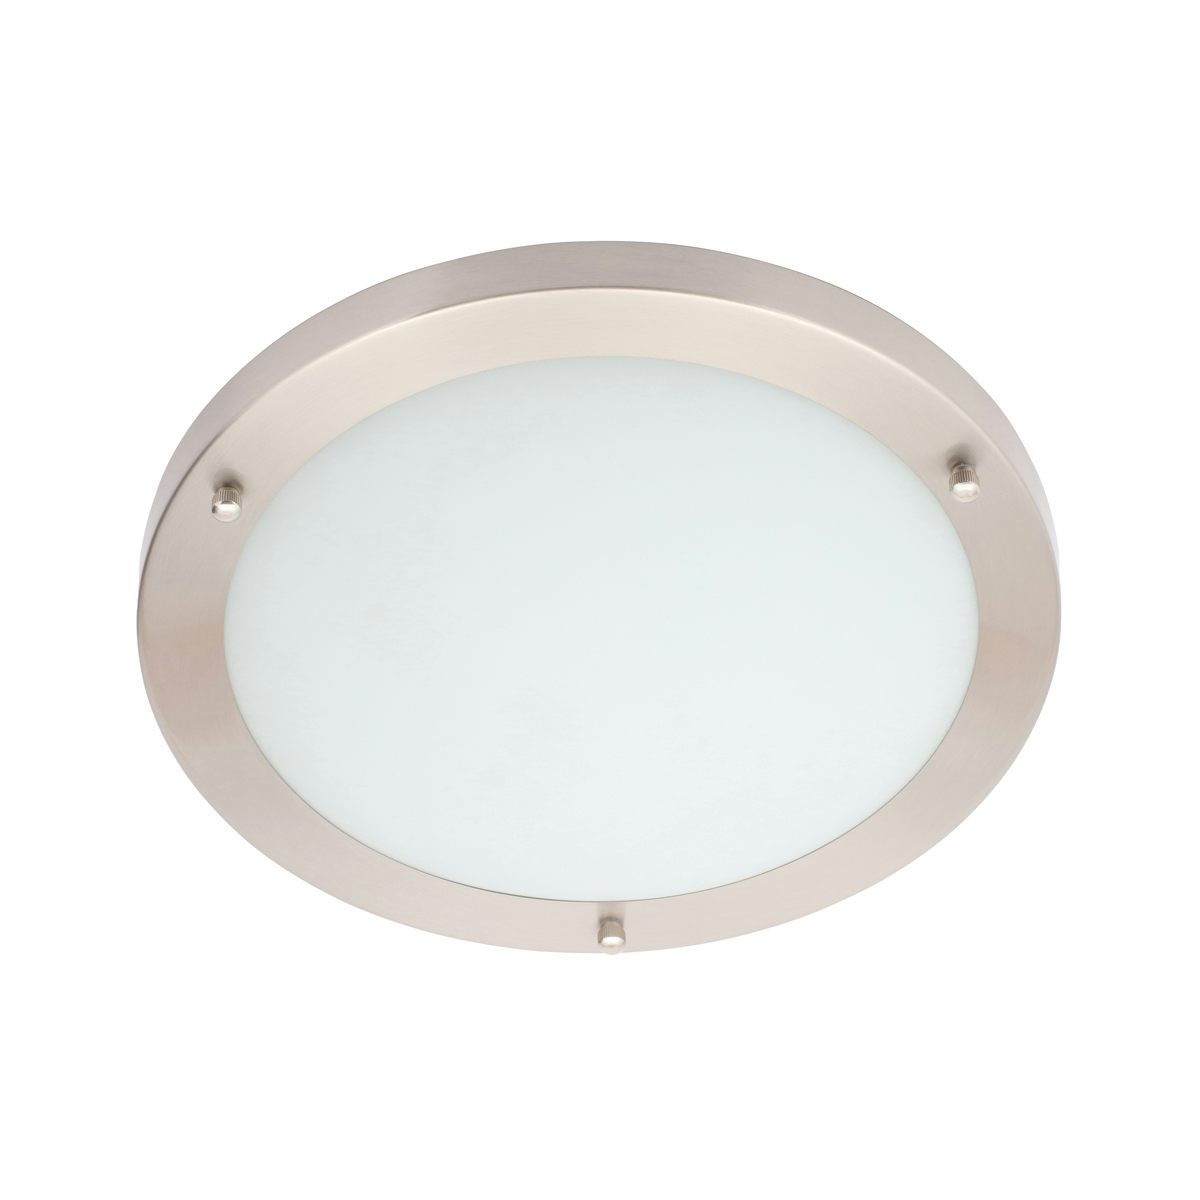 Forum Draco satin nickel large round flush bathroom ceiling light